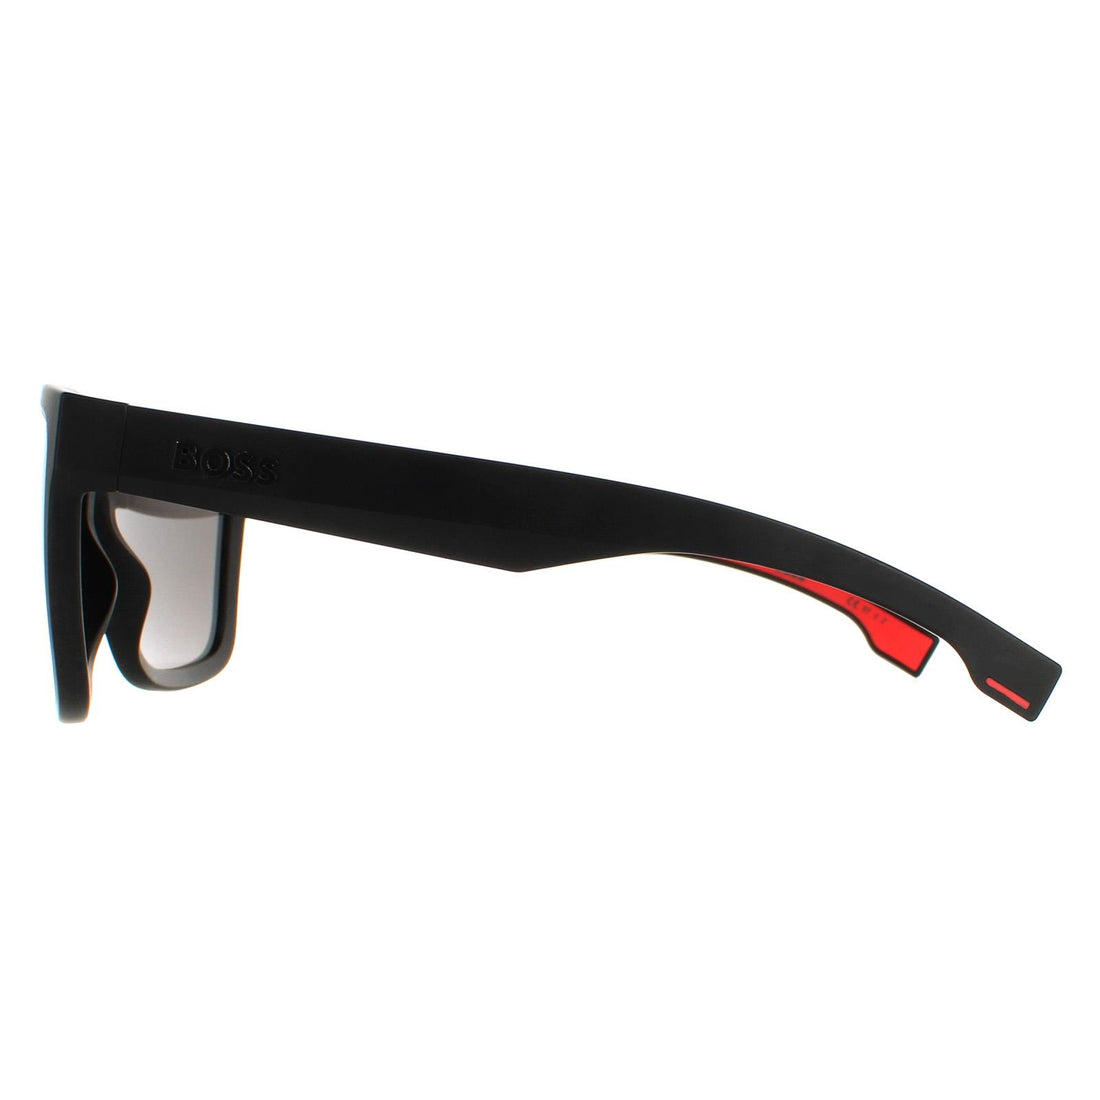 Hugo Boss Sunglasses BOSS 1451/S 003 M9 Matte Black Grey Polarized